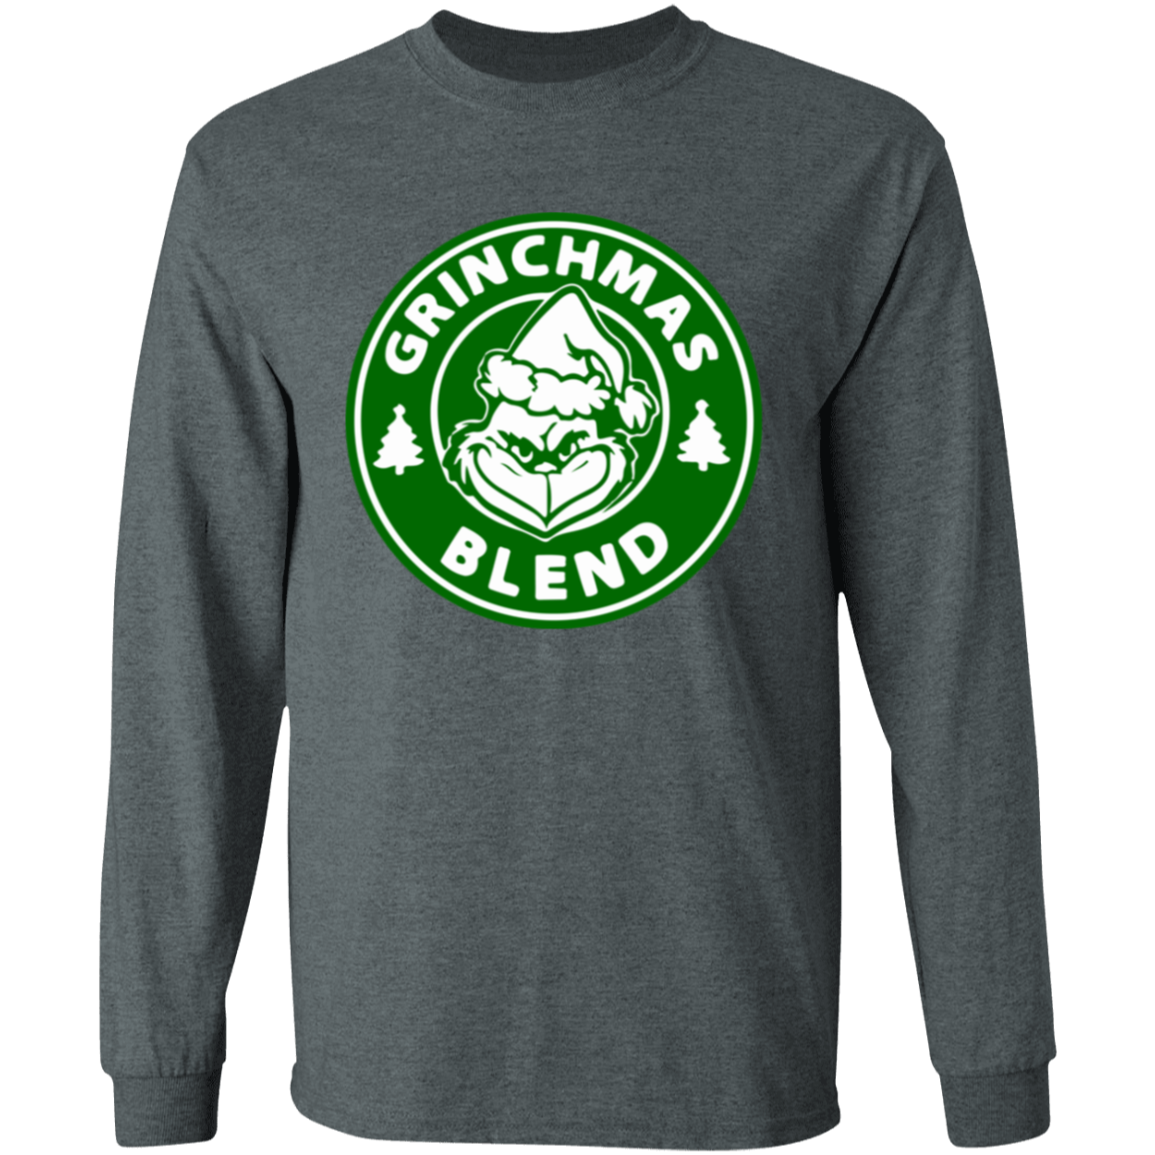 GrinchBucks LS T-Shirt 5.3 oz.